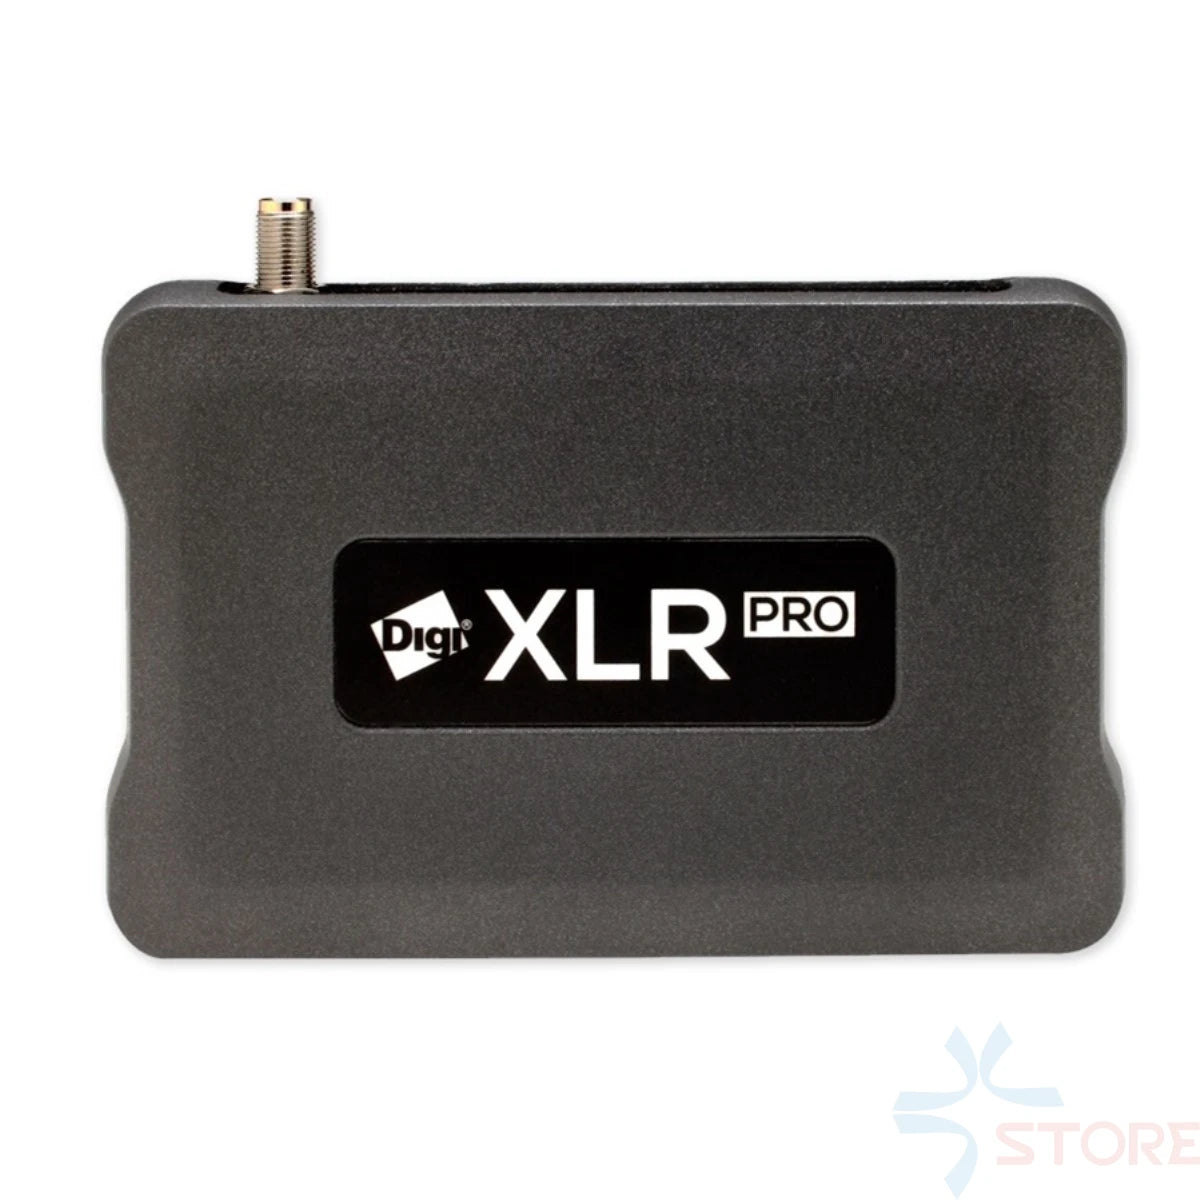 DIGI XLR PRO XL9-UA Industrial 900 MHz Radio - Long-Range modem for serial and Ethernet devices